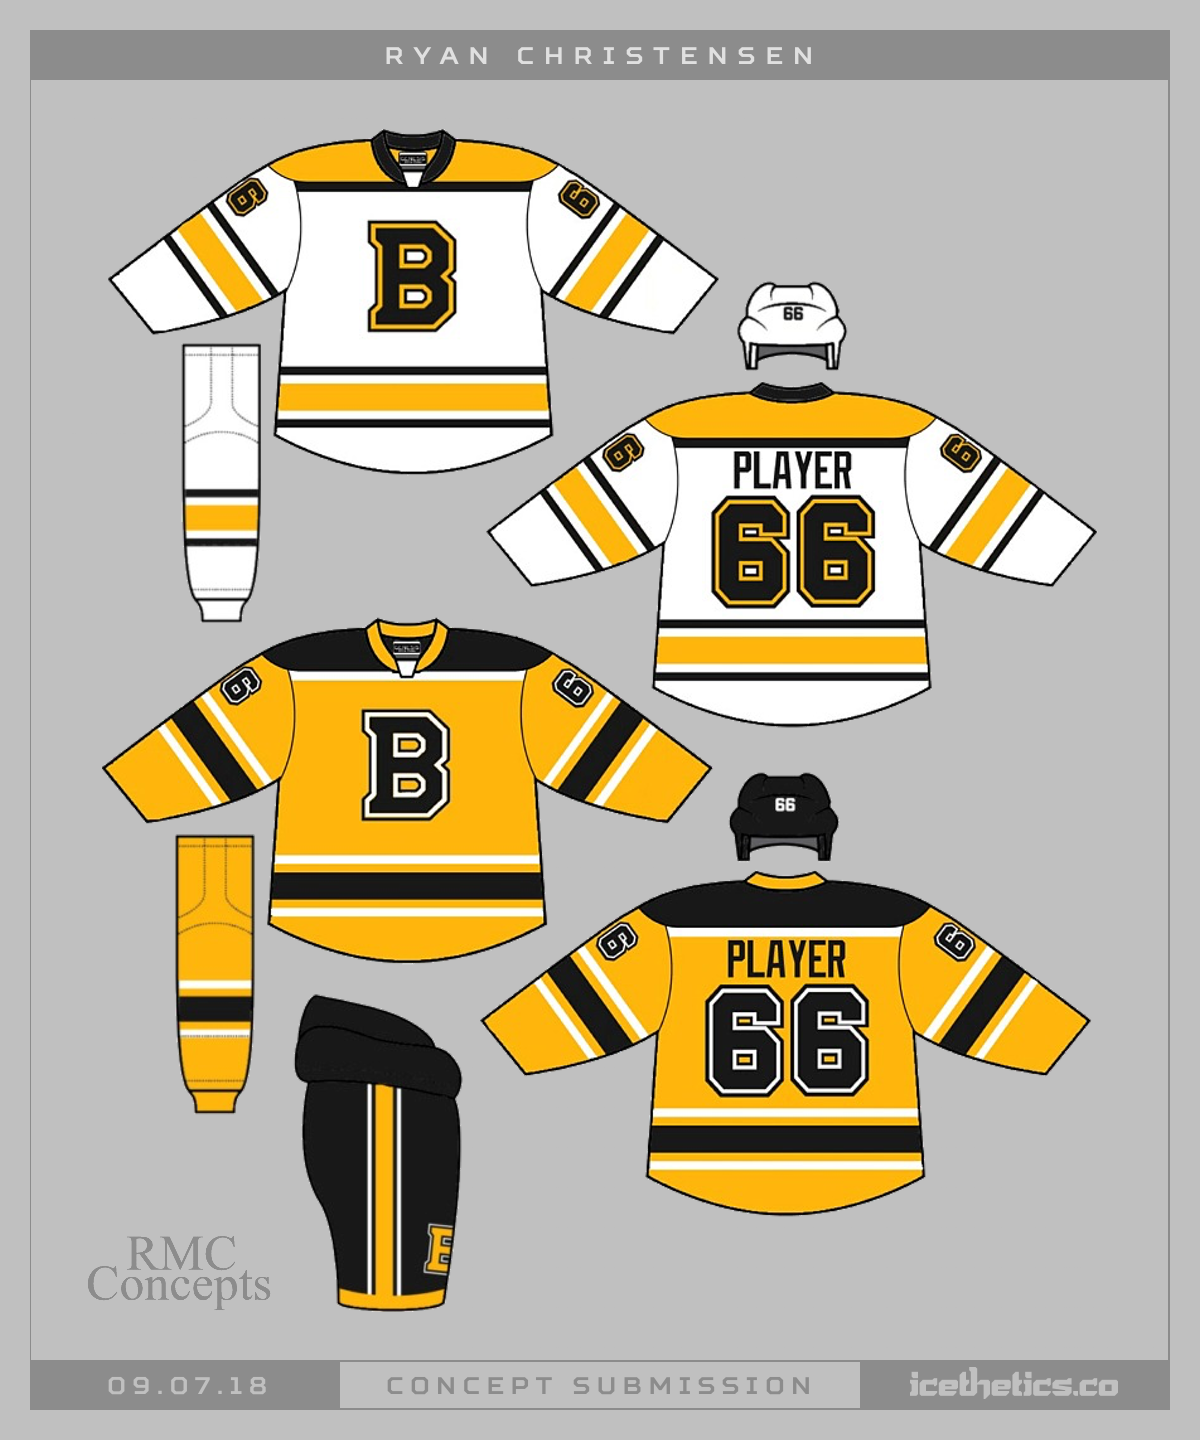 Bruins Third Jersey Sked - Blog - icethetics.info